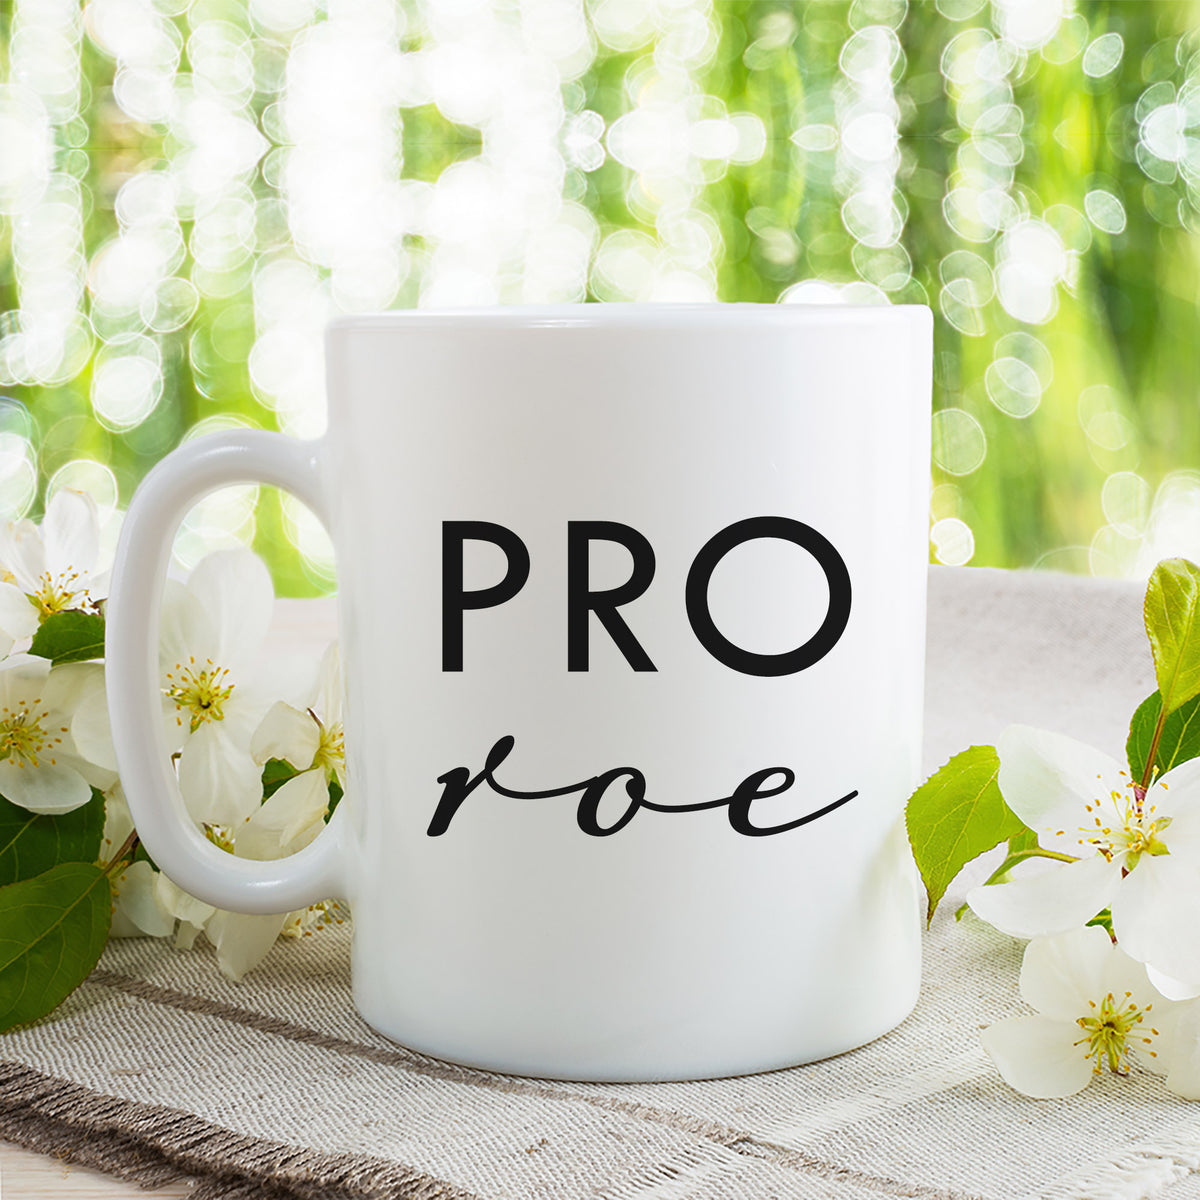 Pro Roe Women's Rights Mug